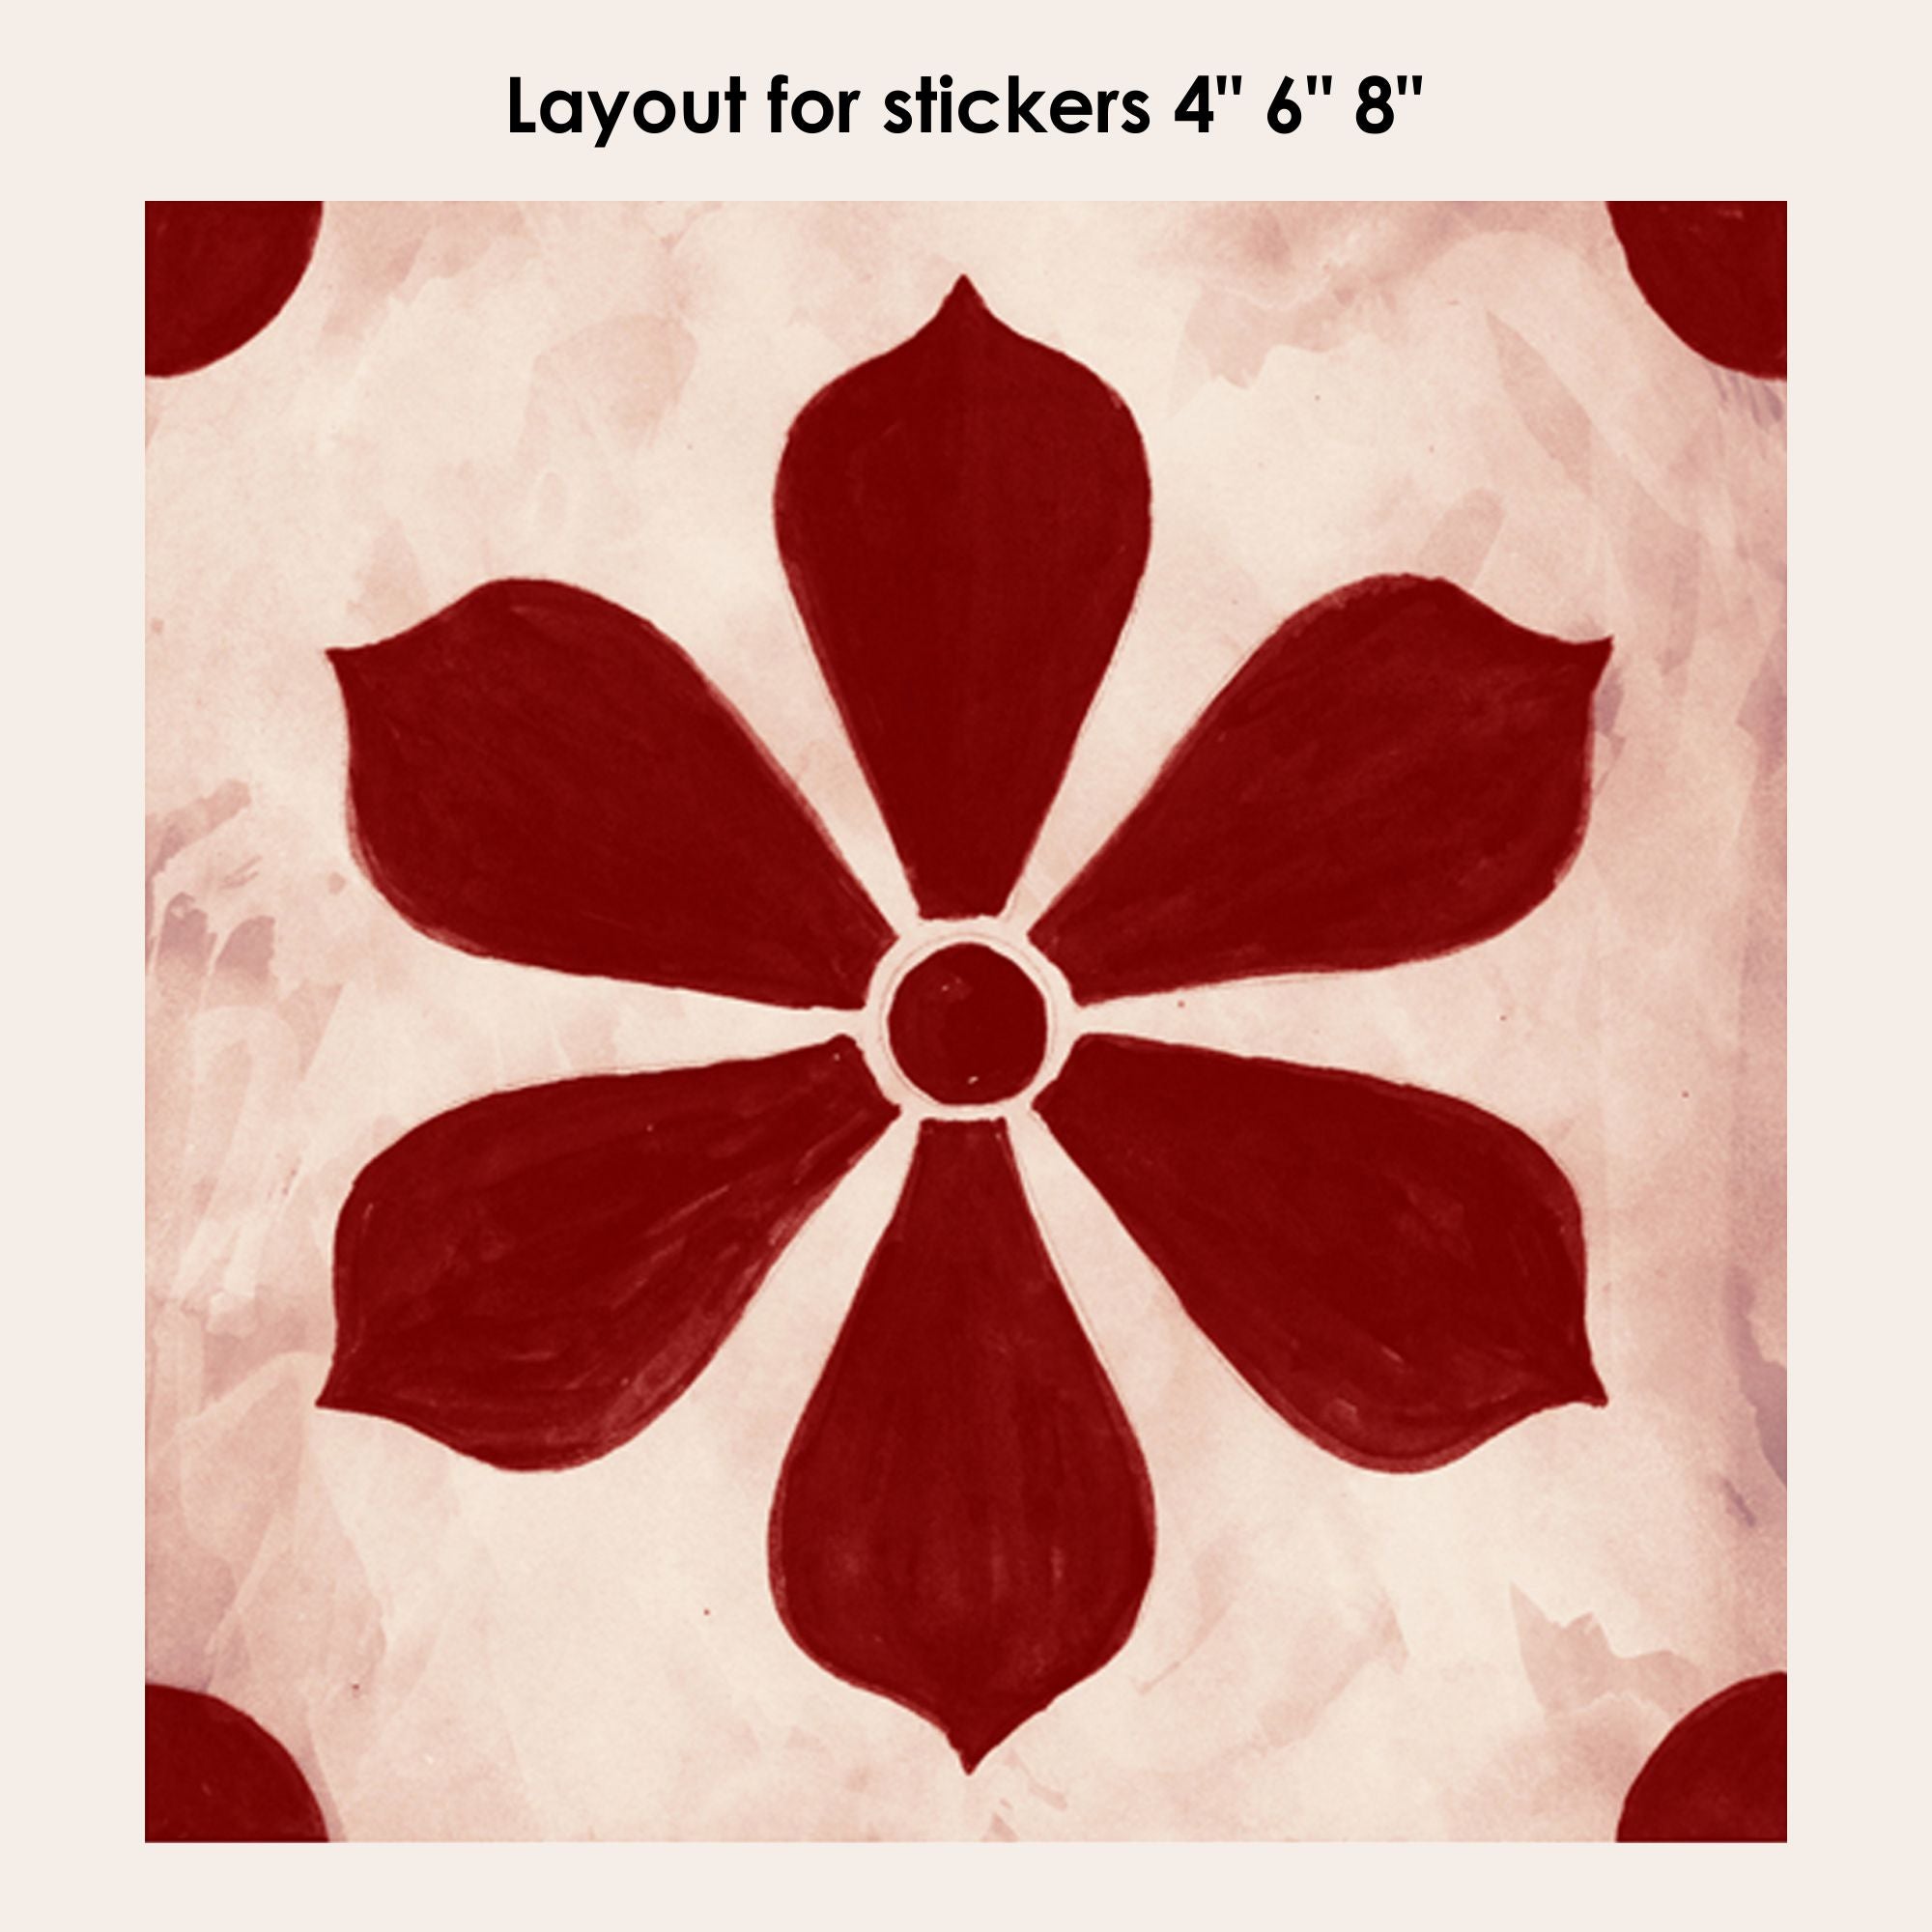 Moroccan Tile Sticker - TenStickers